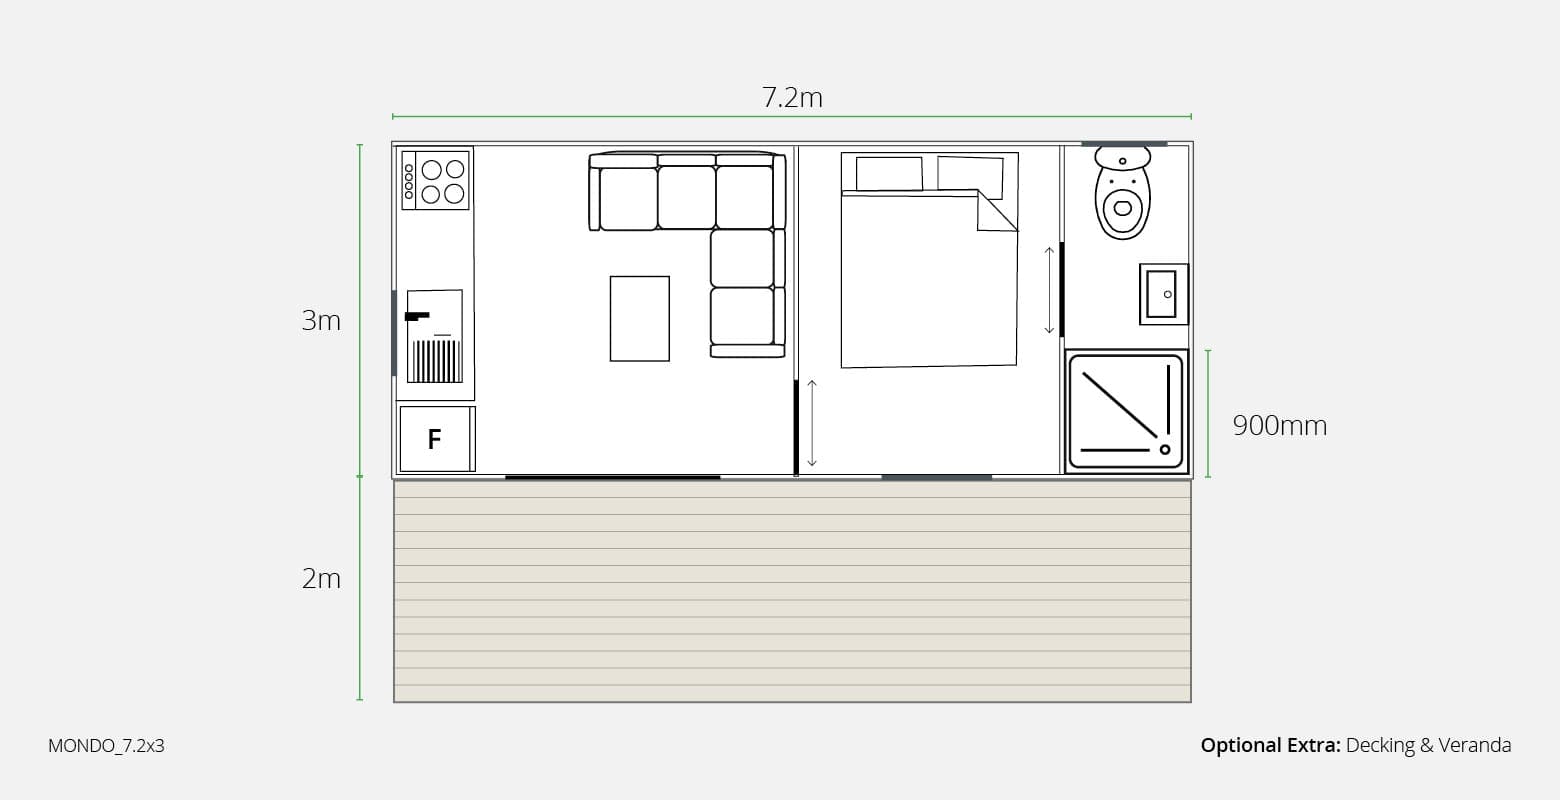 cool-cabins-floor-plan-7mx3m